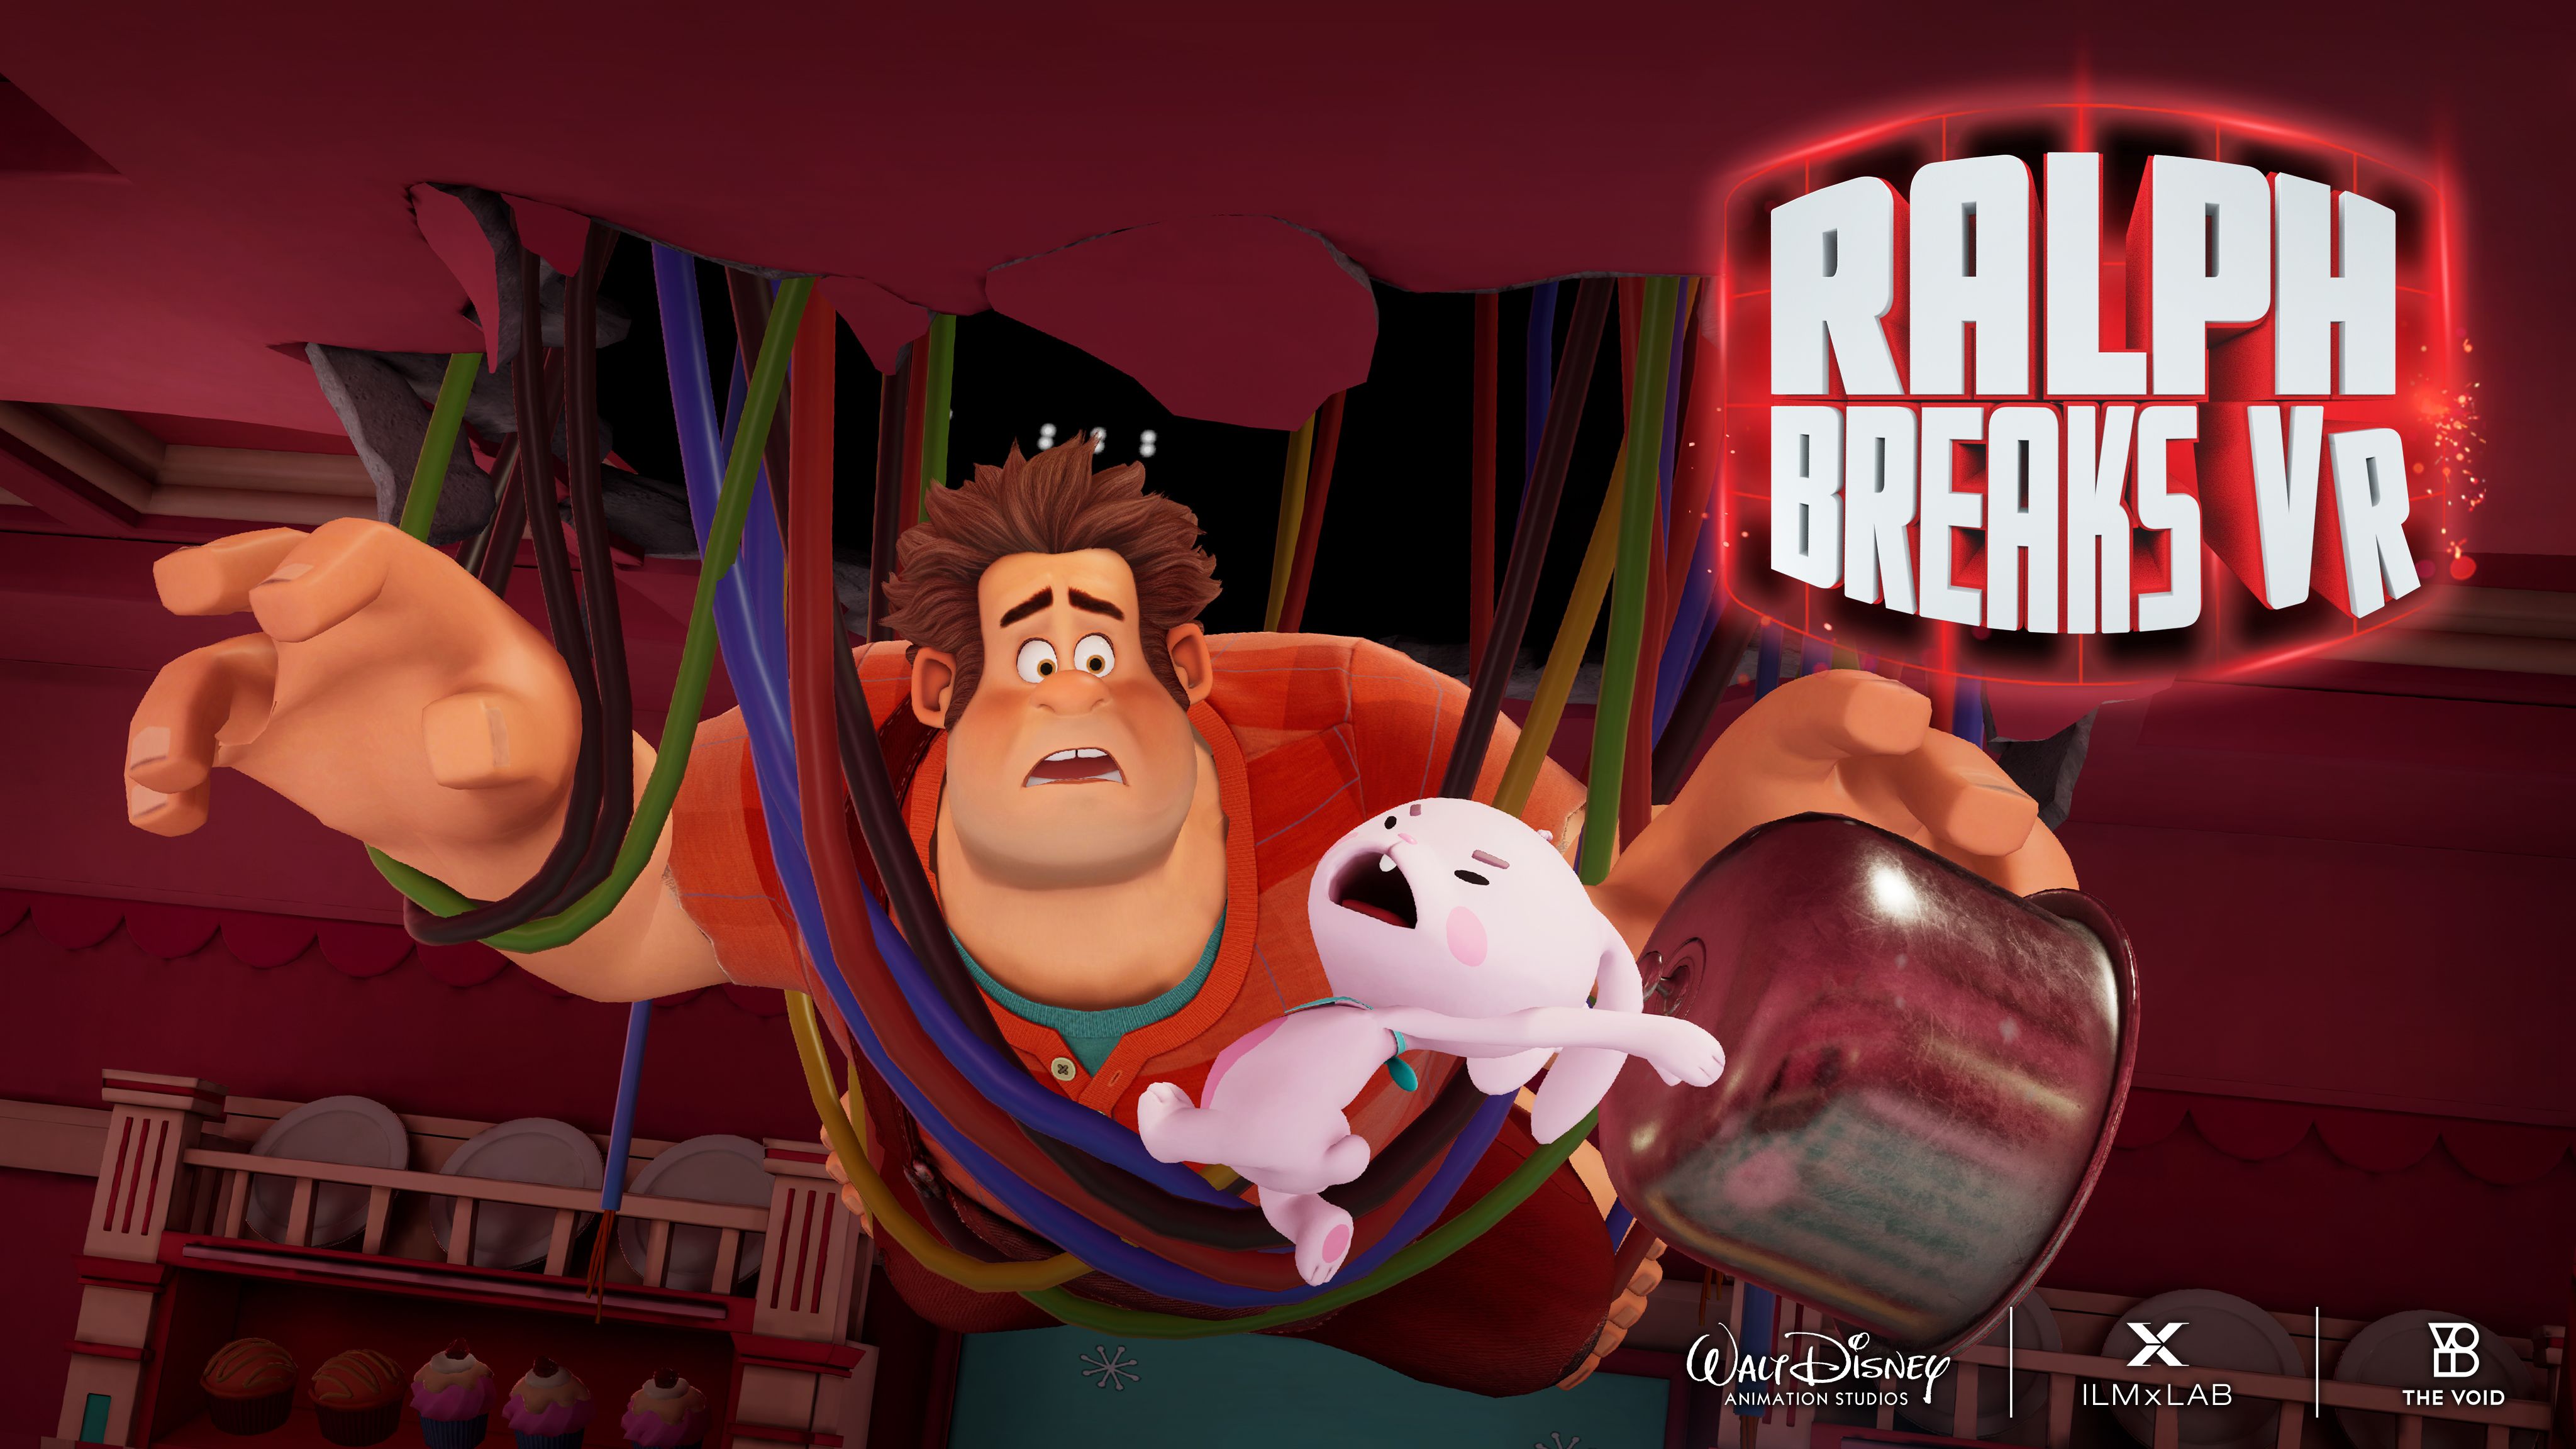 Wreck-It Ralph' hopes to break virtual reality, too | CNN